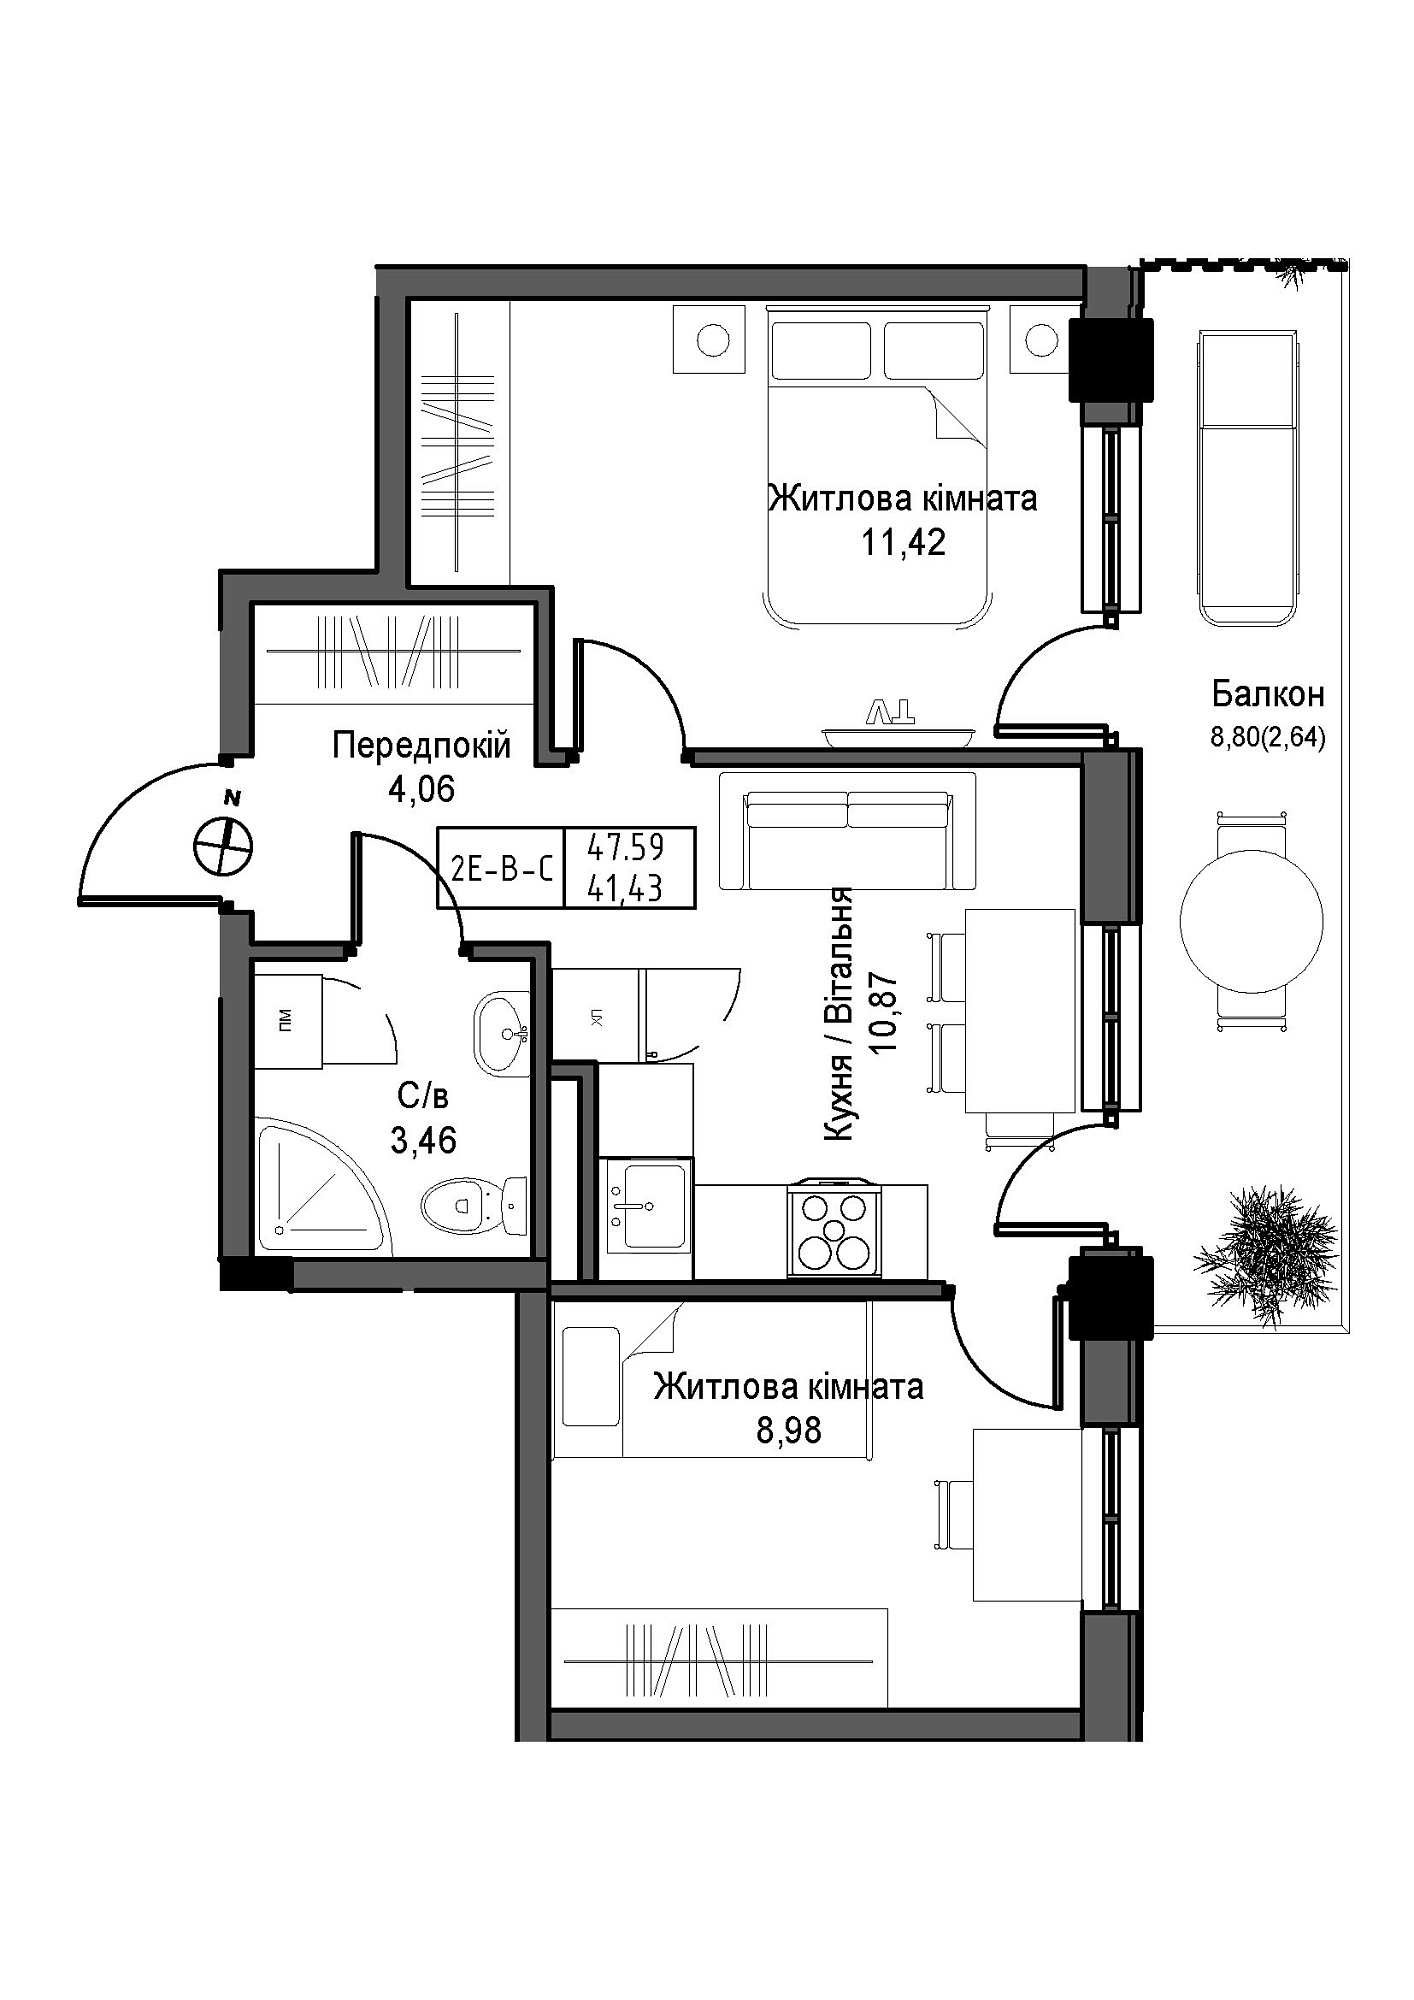 Planning 2-rm flats area 41.43m2, UM-007-10/0007.